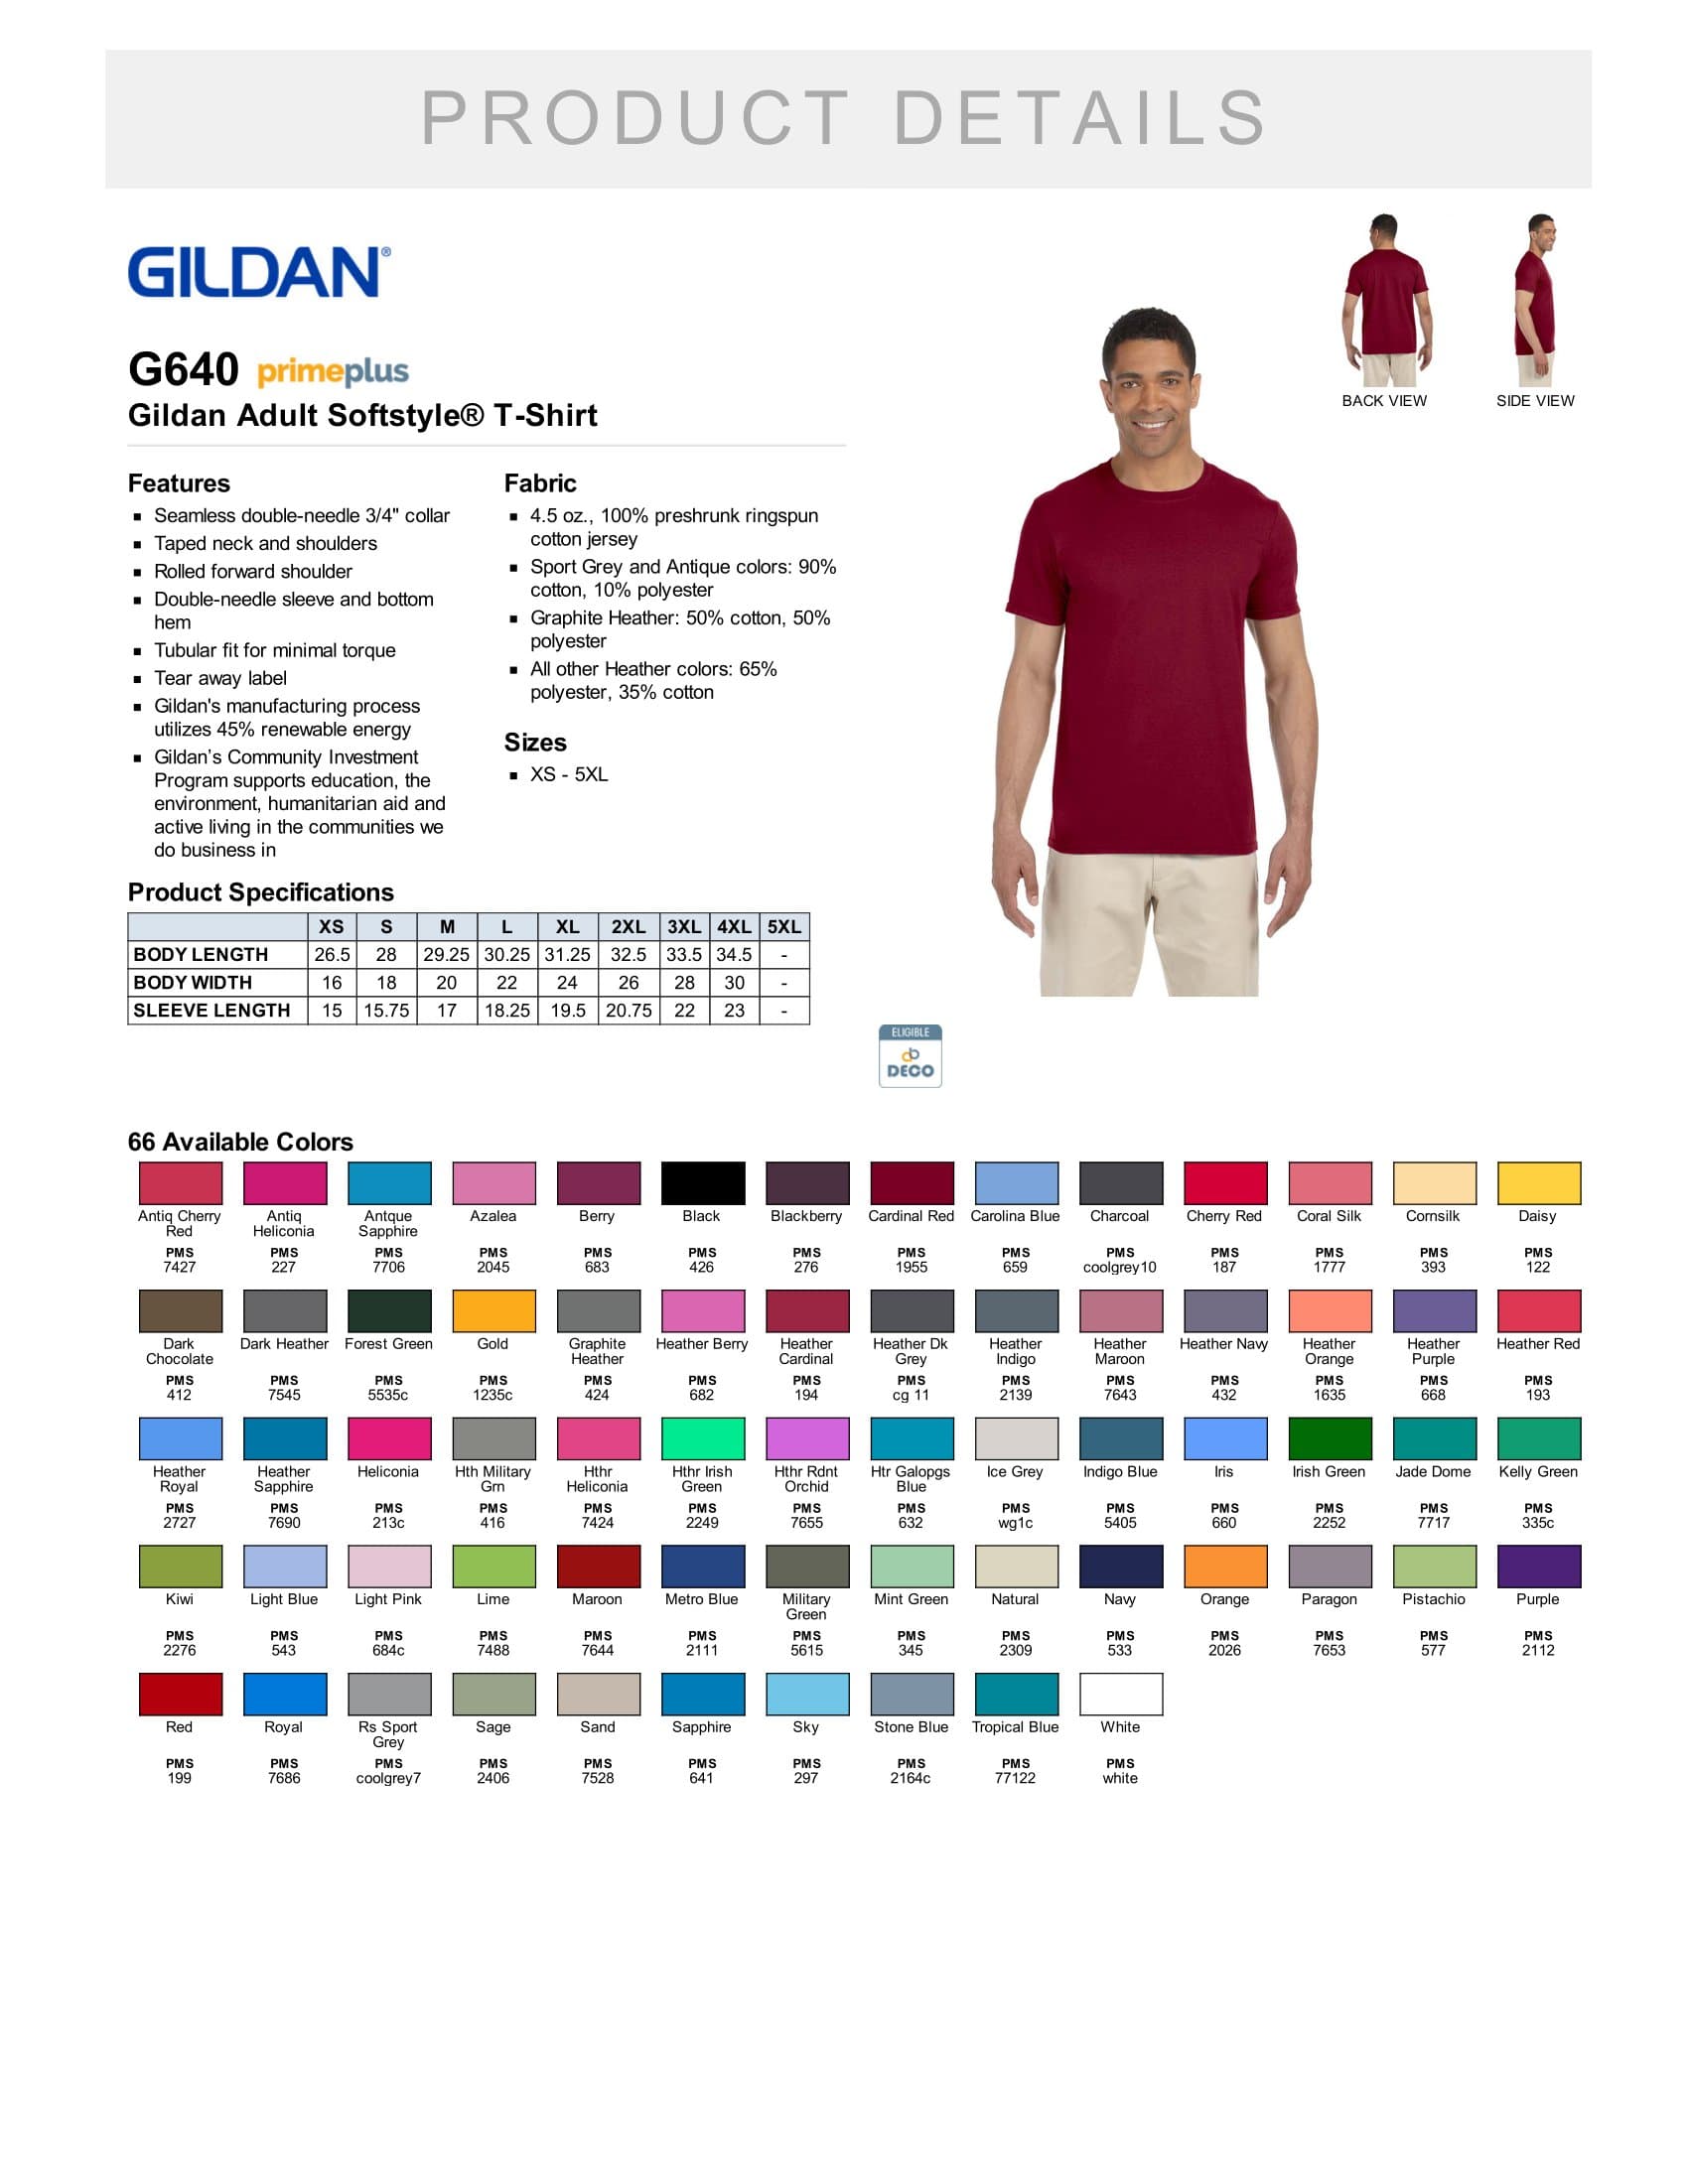 Gildan G640 